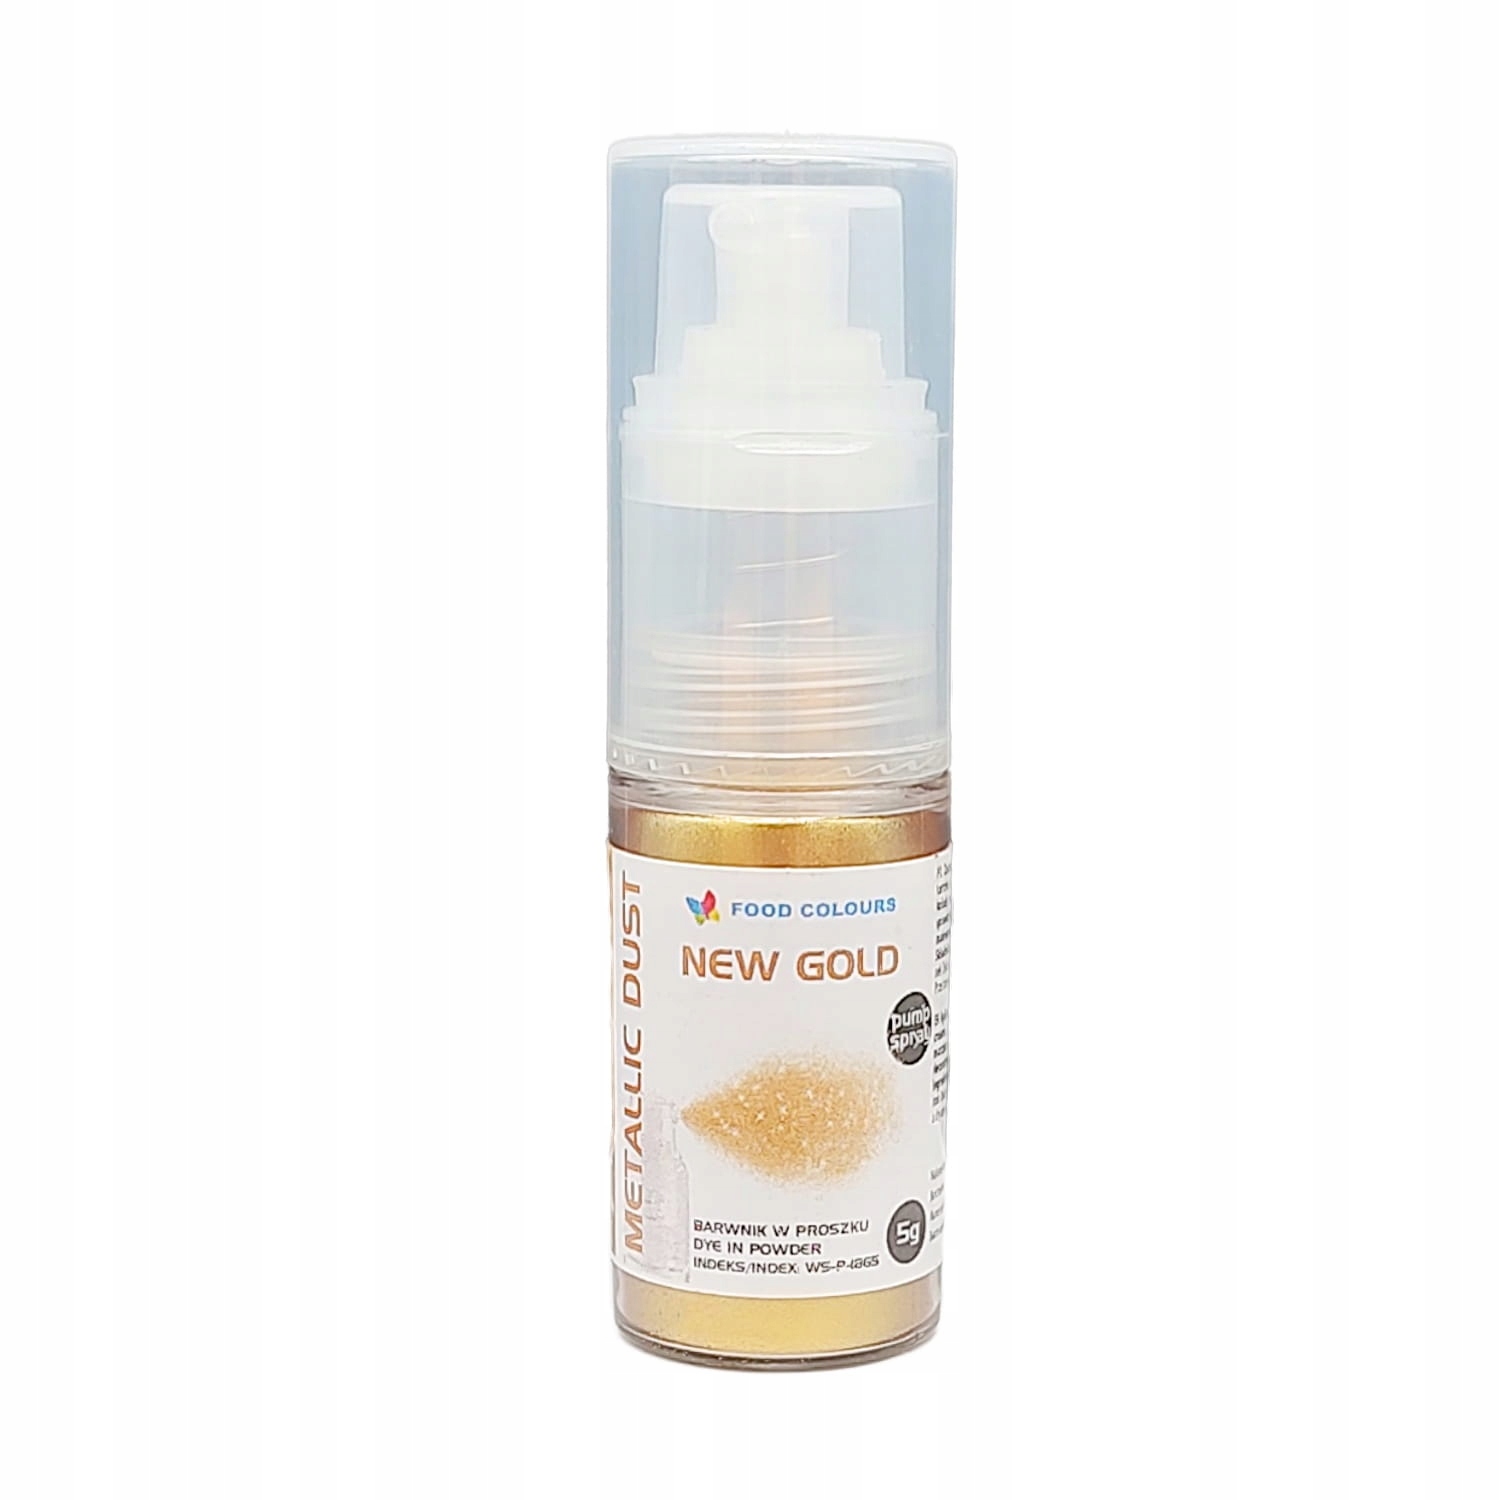 Pyłek z pompką spray brokat jadalny Food Colours NEW GOLD 5G BEZ E171